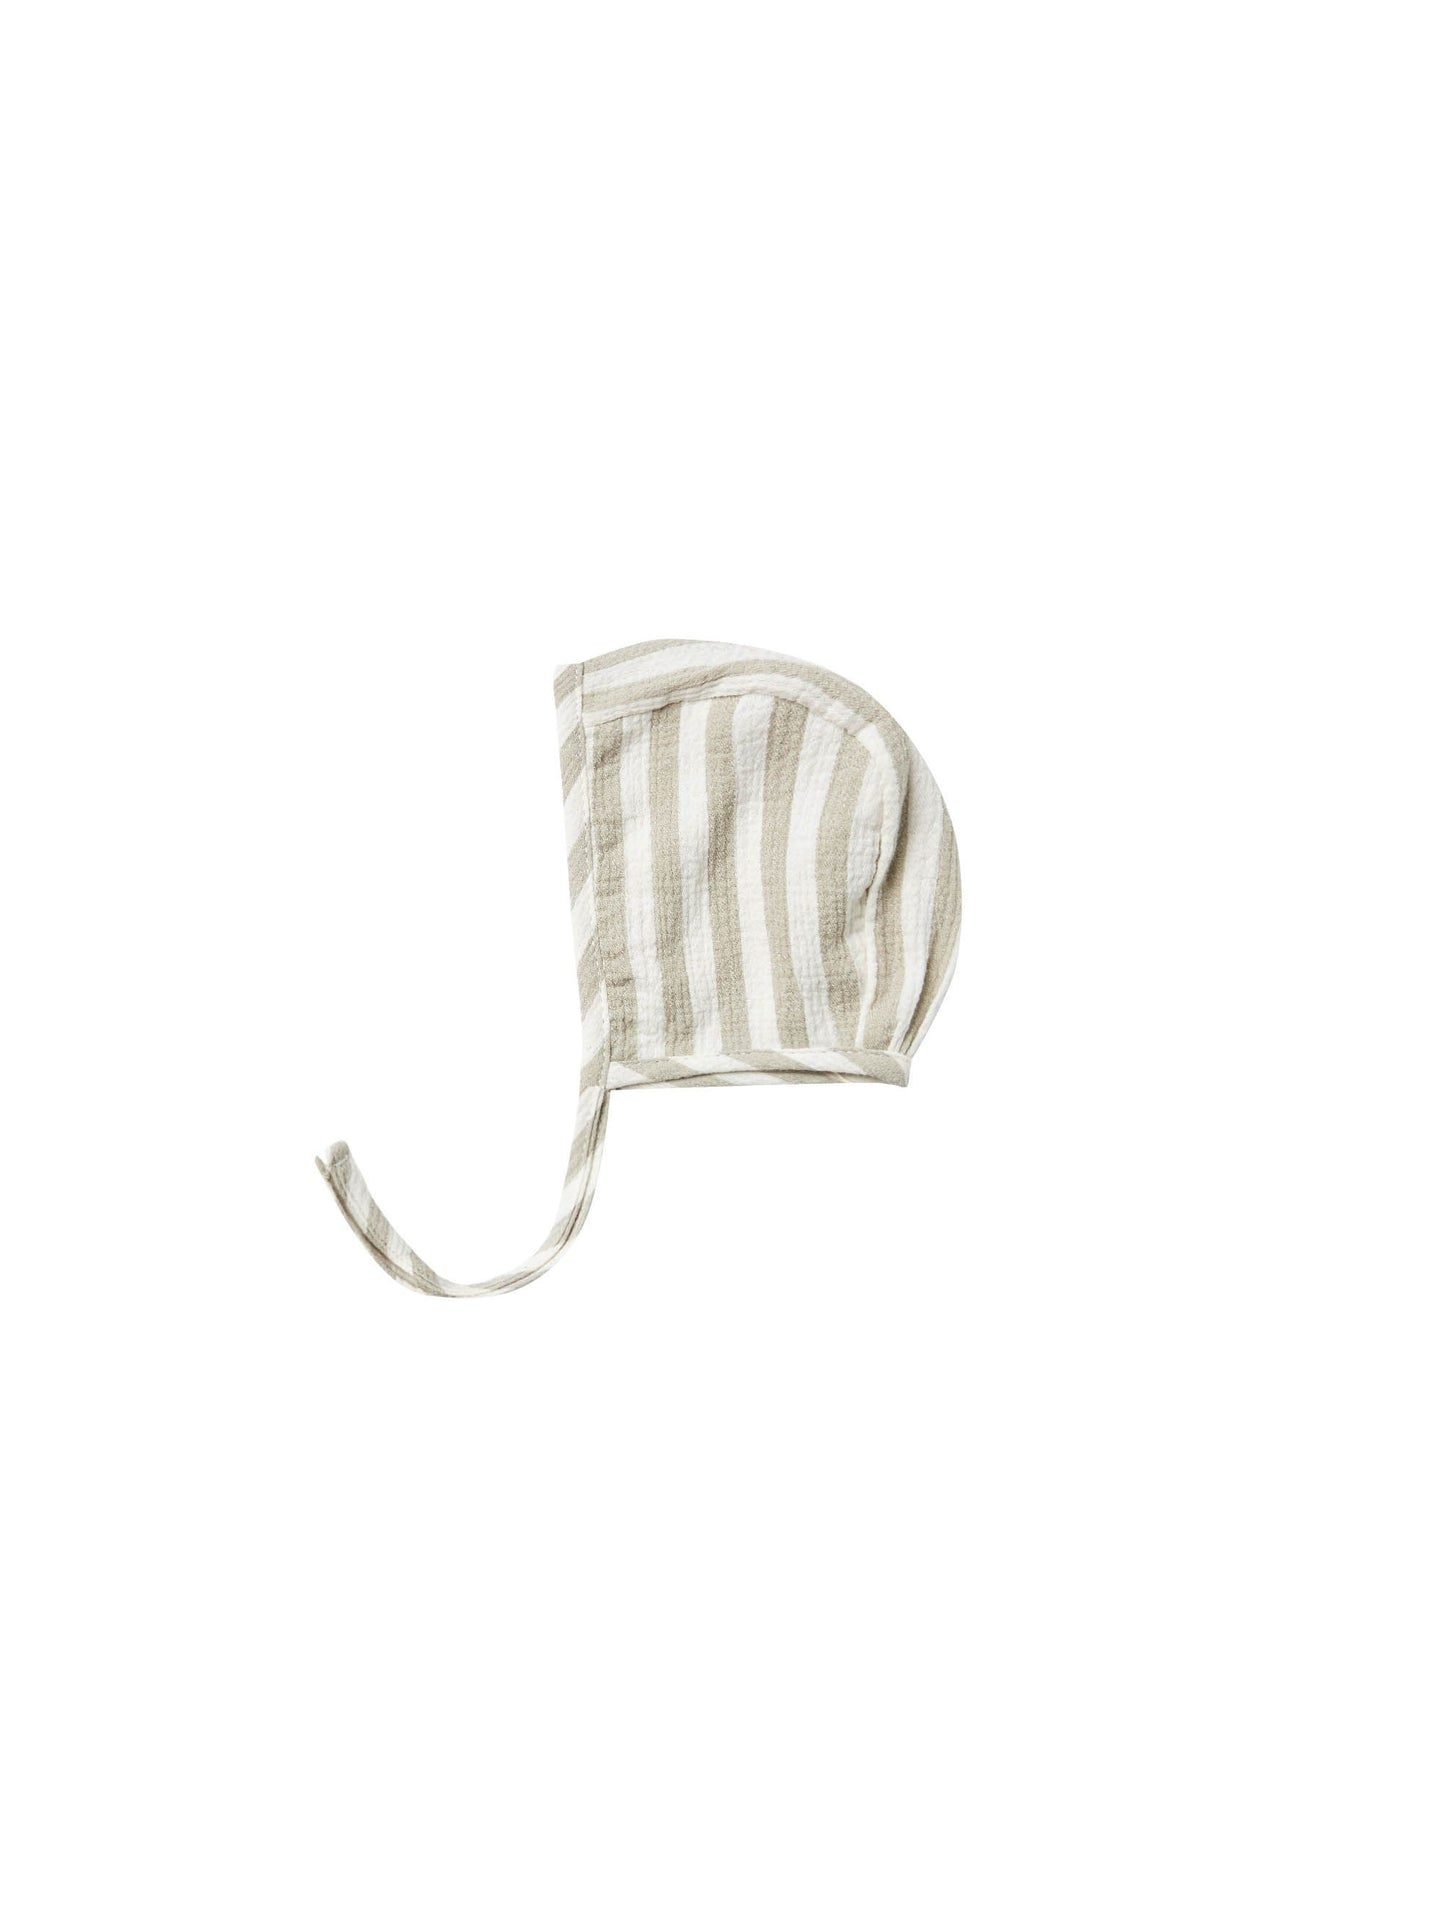 Quincy Mae - Woven Baby Bonnet - Sage Stripe